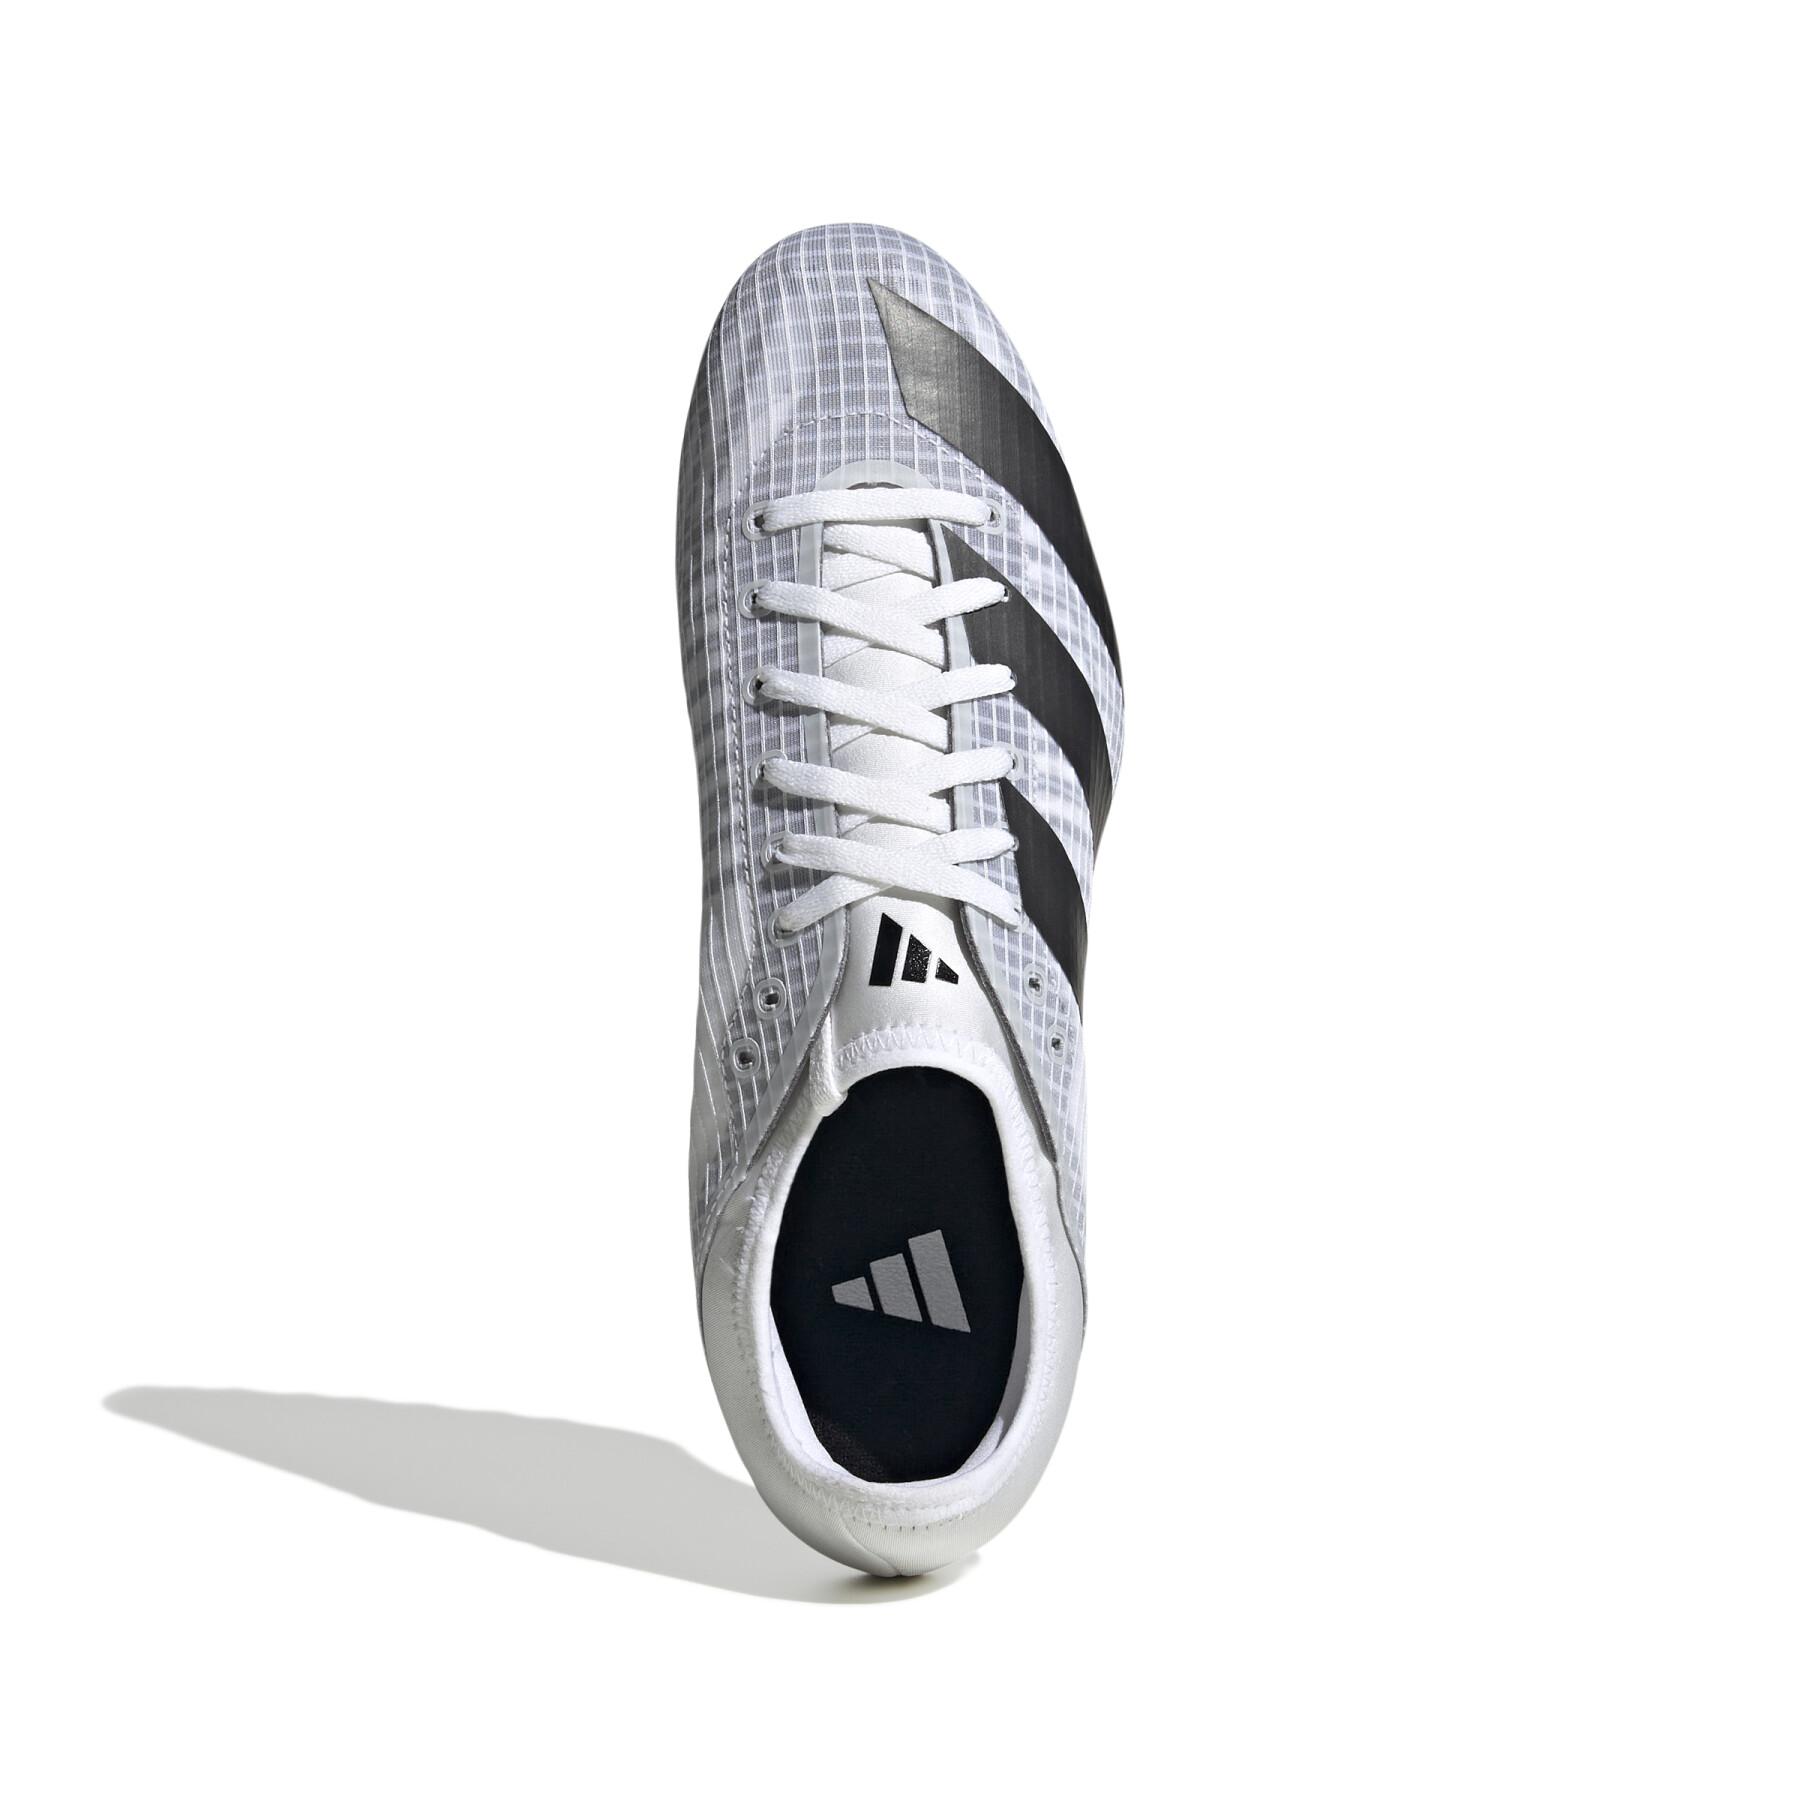 Athletic shoes adidas 75 Sprintstar